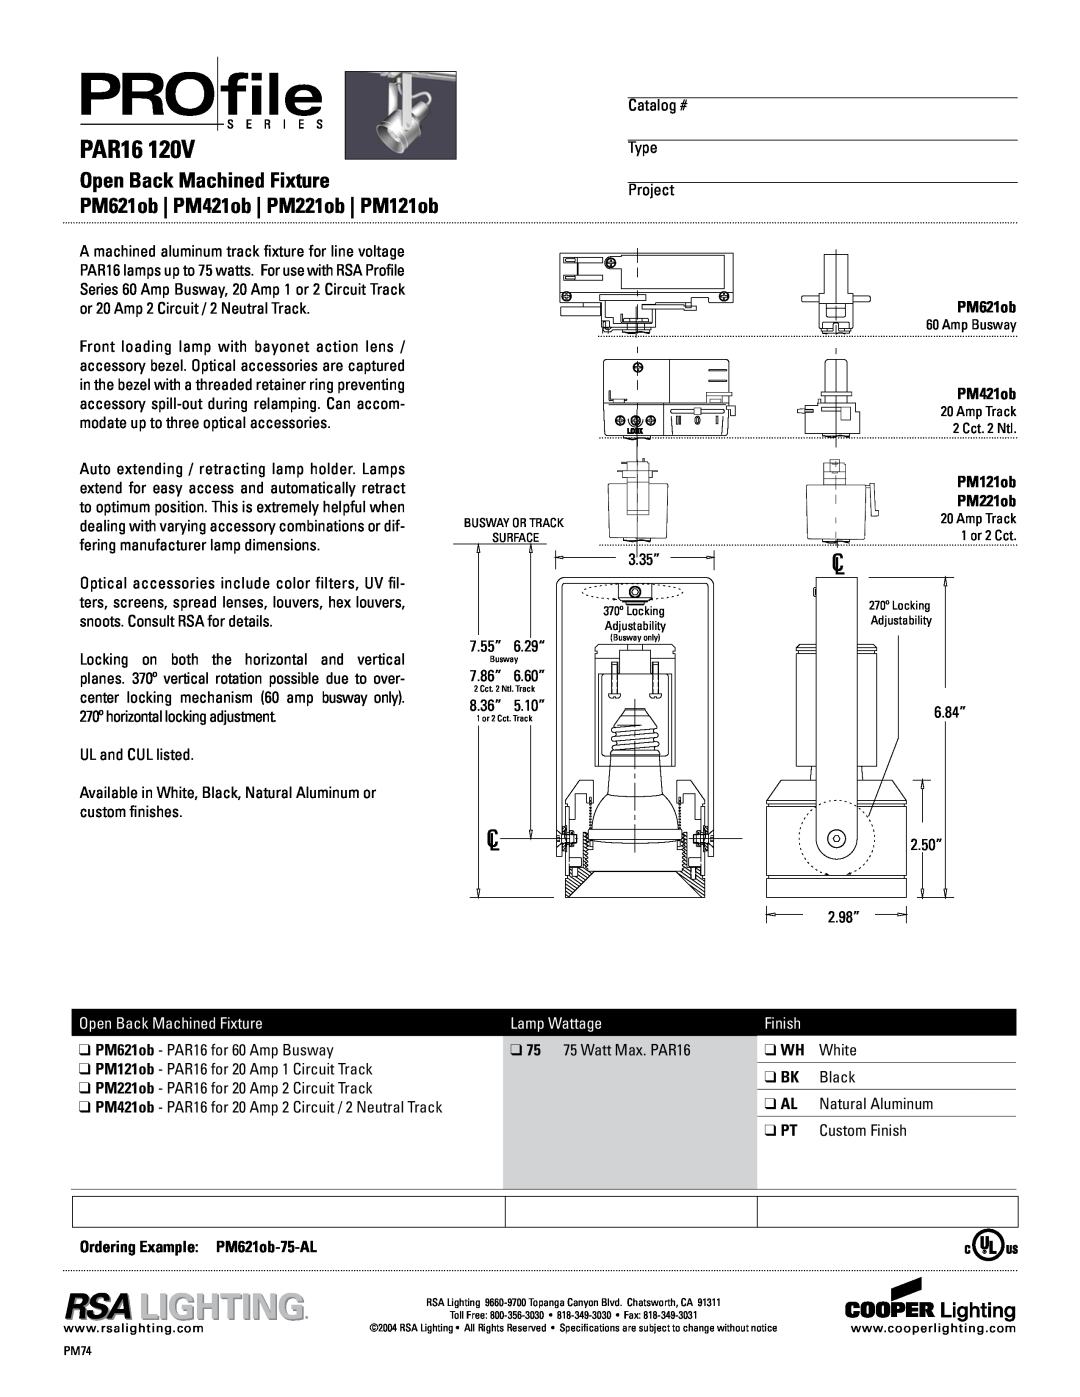 Cooper Lighting specifications PAR16, Open Back Machined Fixture, PM621ob PM421ob PM221ob PM121ob, Lamp Wattage, Finish 